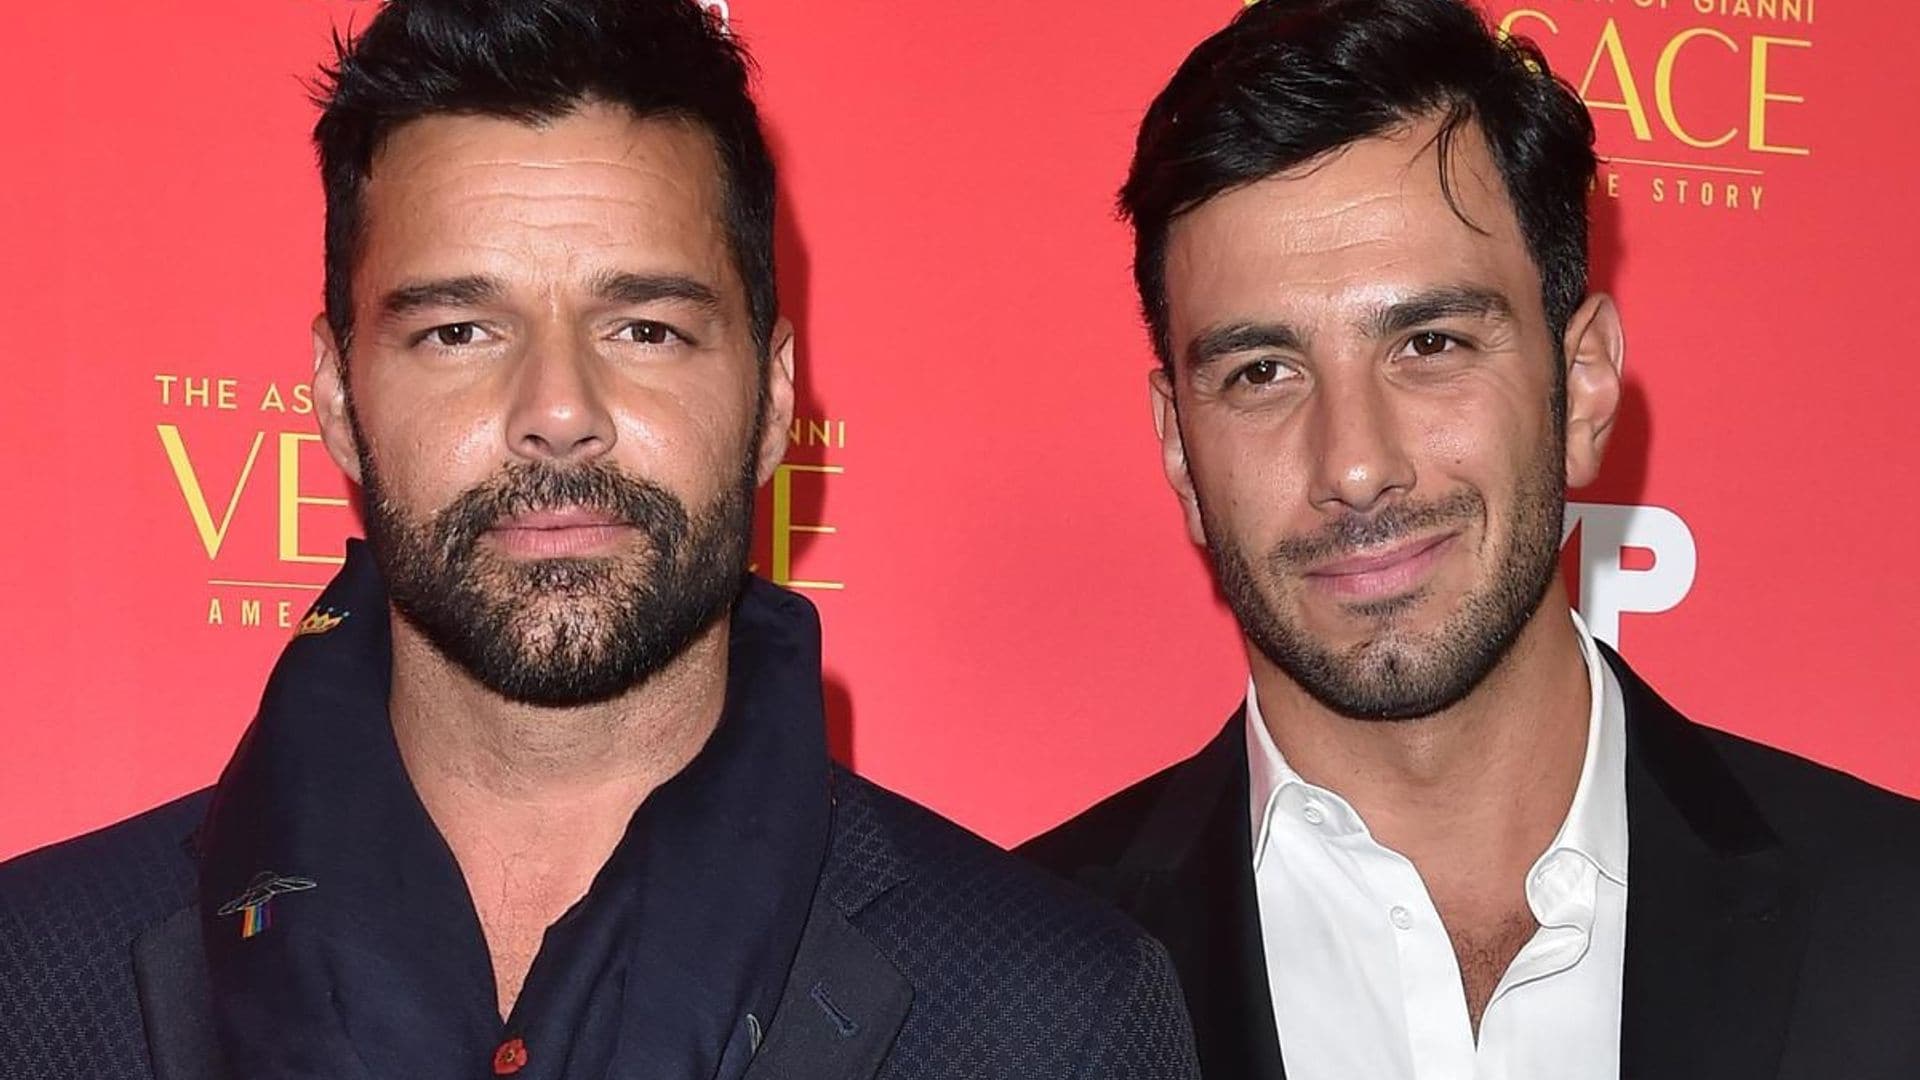 Jwan Yosef celebrates Ricky Martin and shares new photos of their children